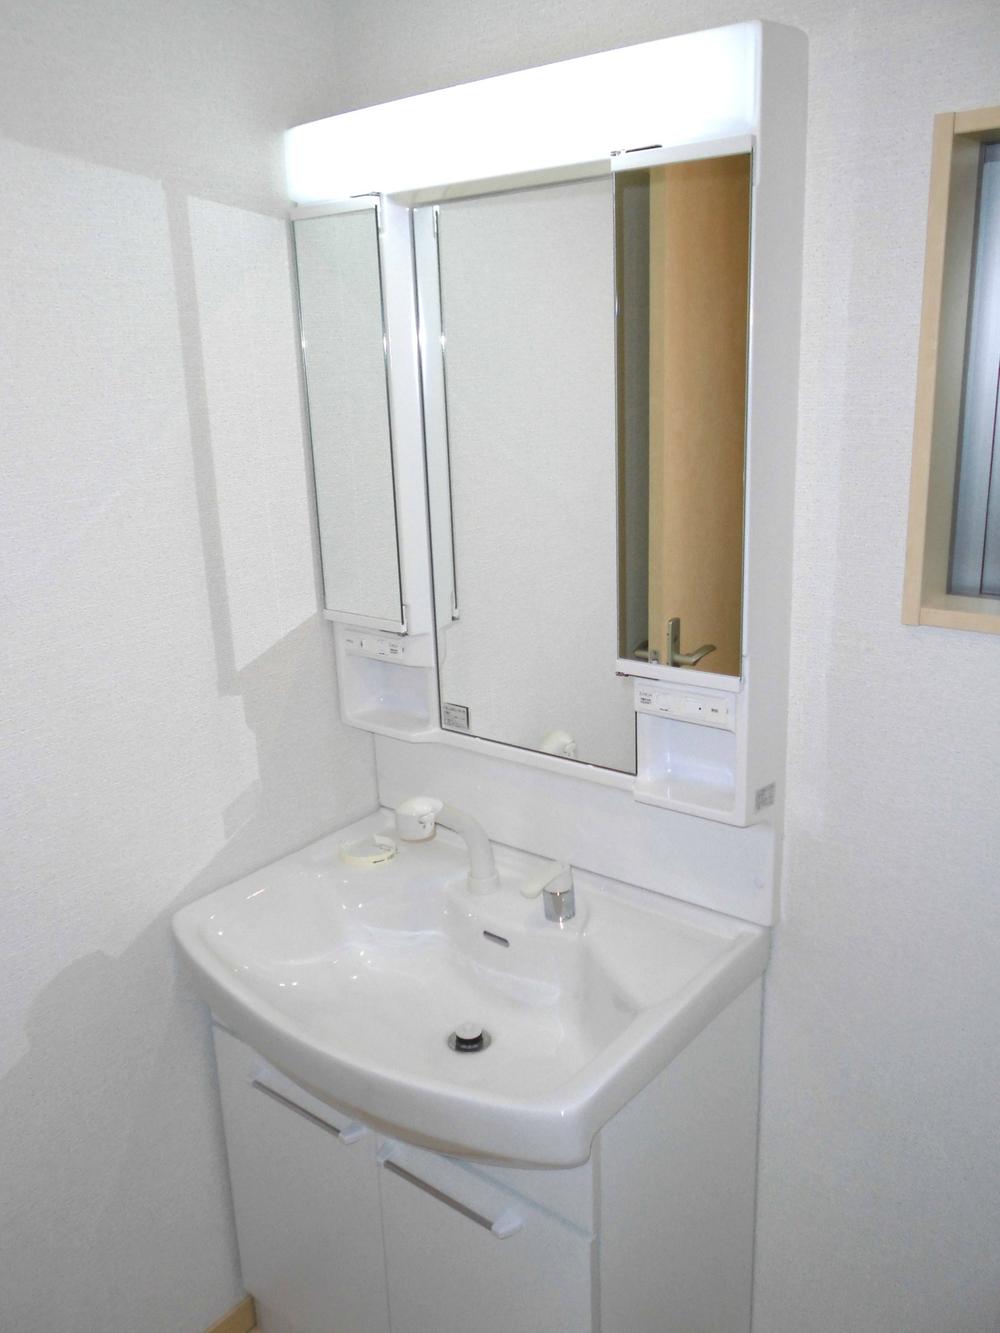 Wash basin, toilet. 1 Building (December 2013) Shooting